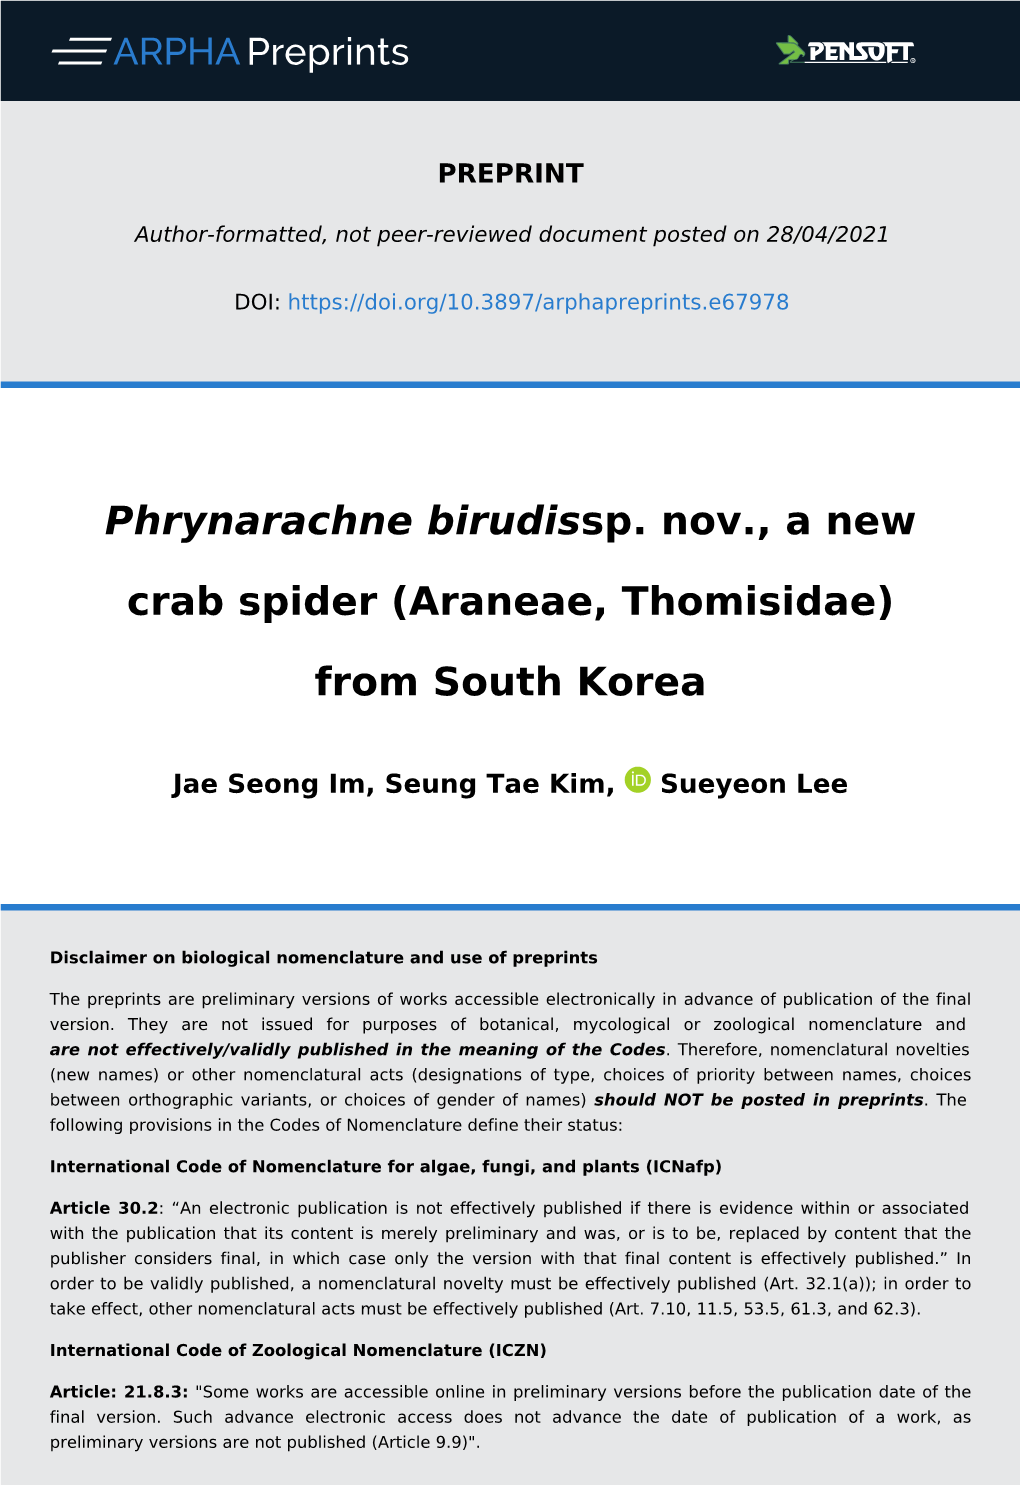 Phrynarachne Birudissp. Nov., a New Crab Spider (Araneae, Thomisidae